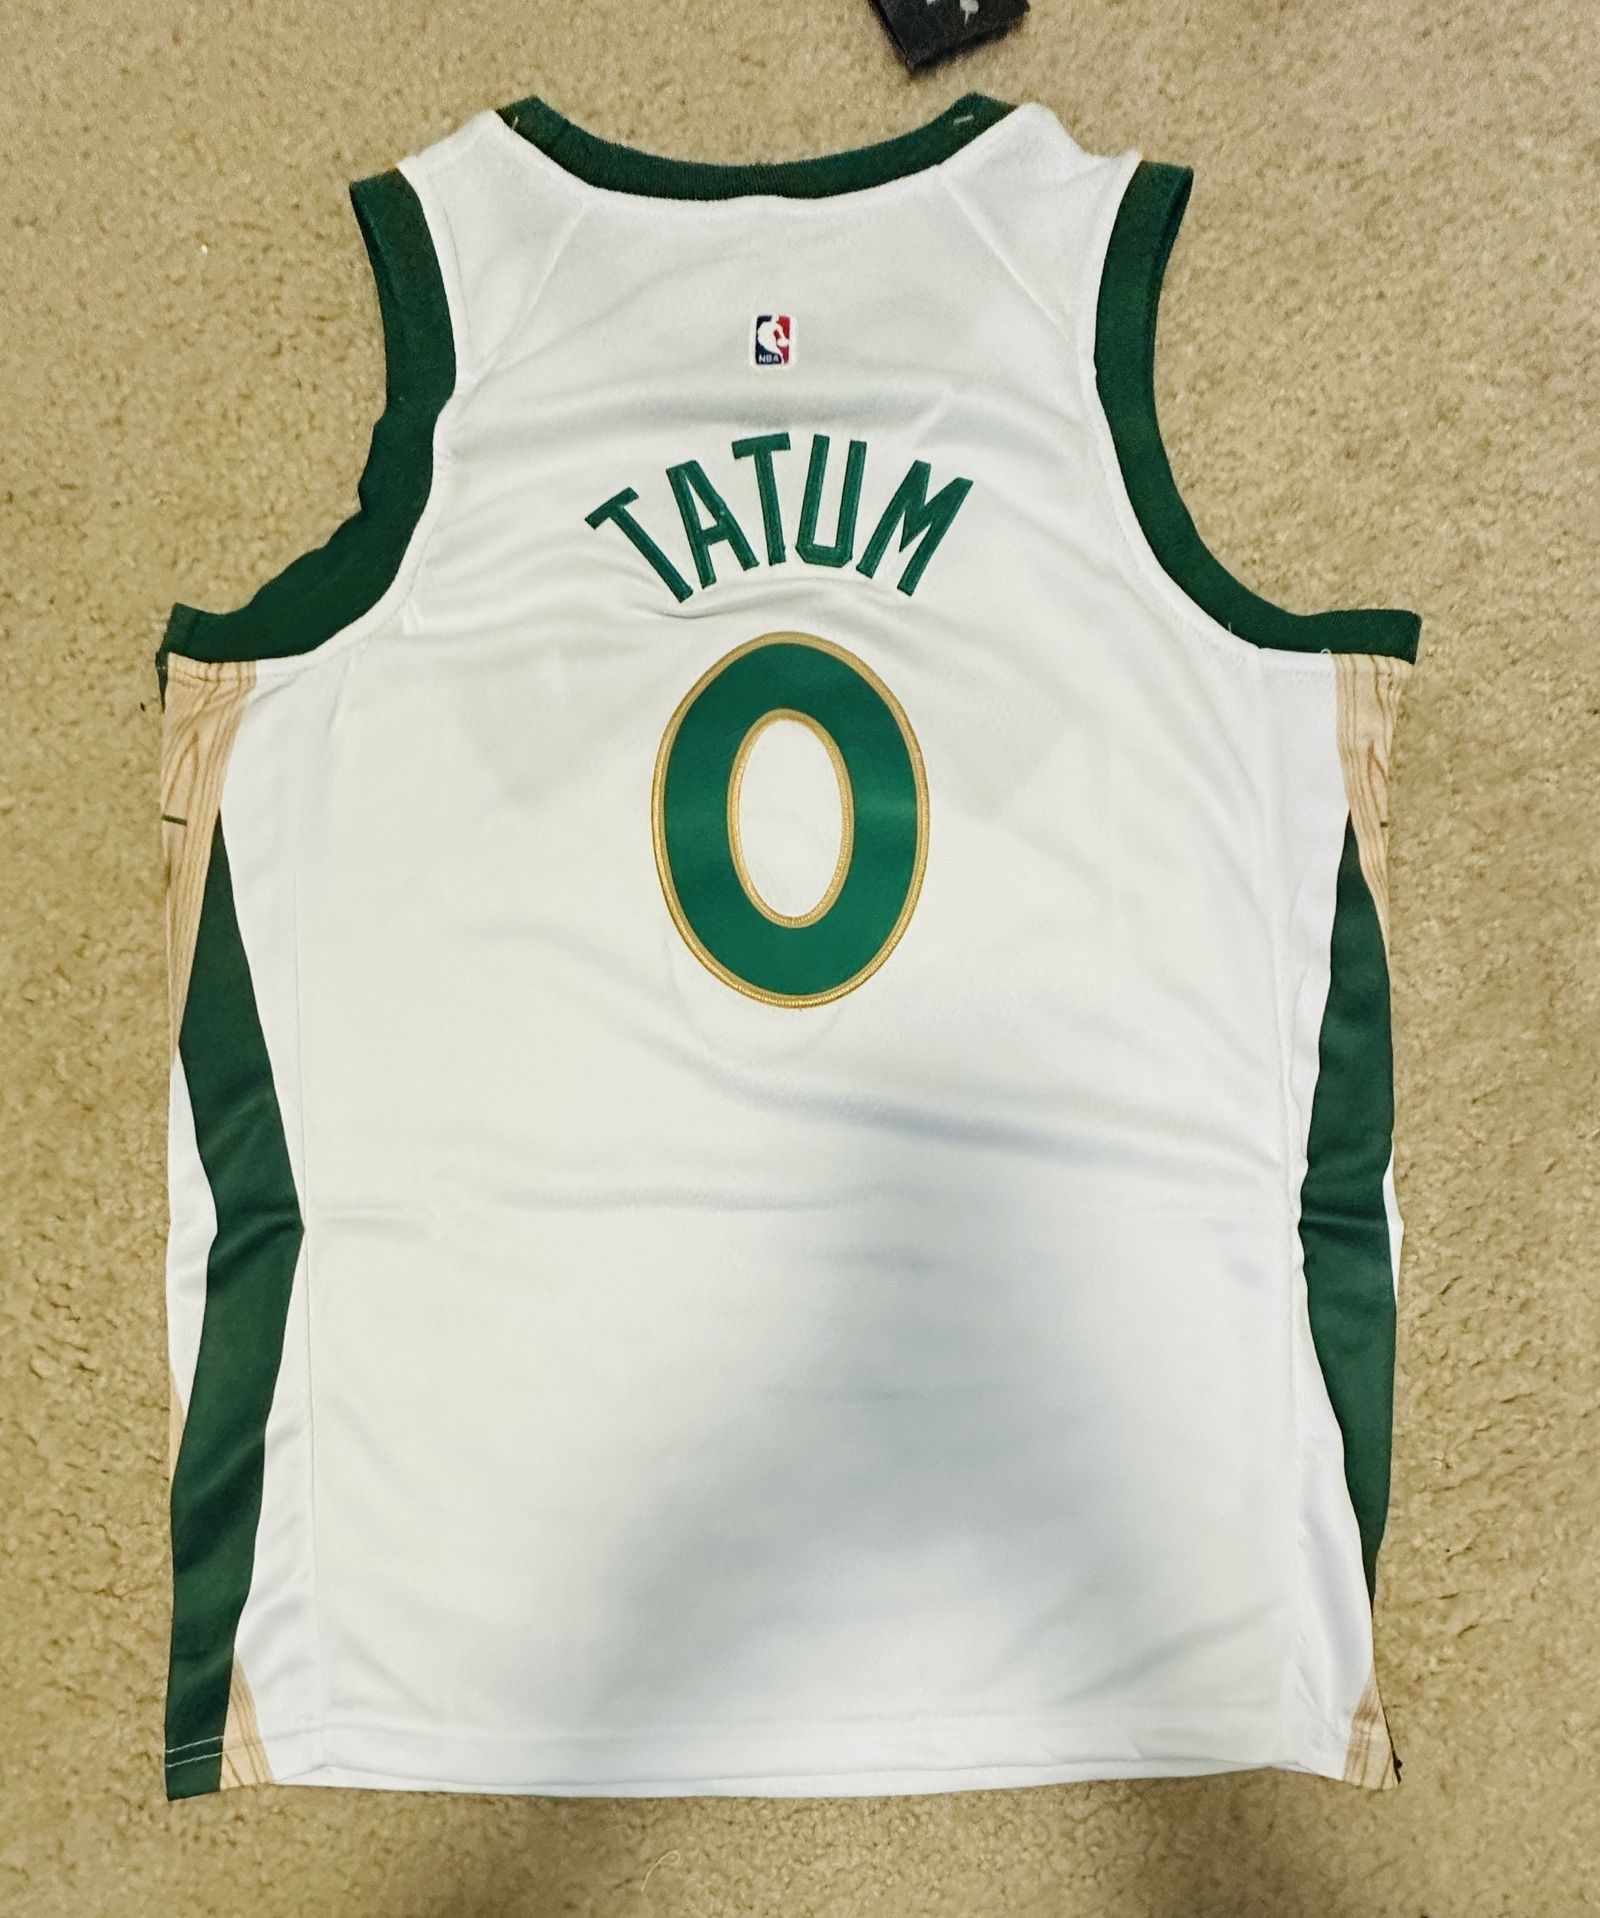 *Youth size* Jayson TATUM Boston Celtics New City Edition NBA Jersey. Size Youth Large. 